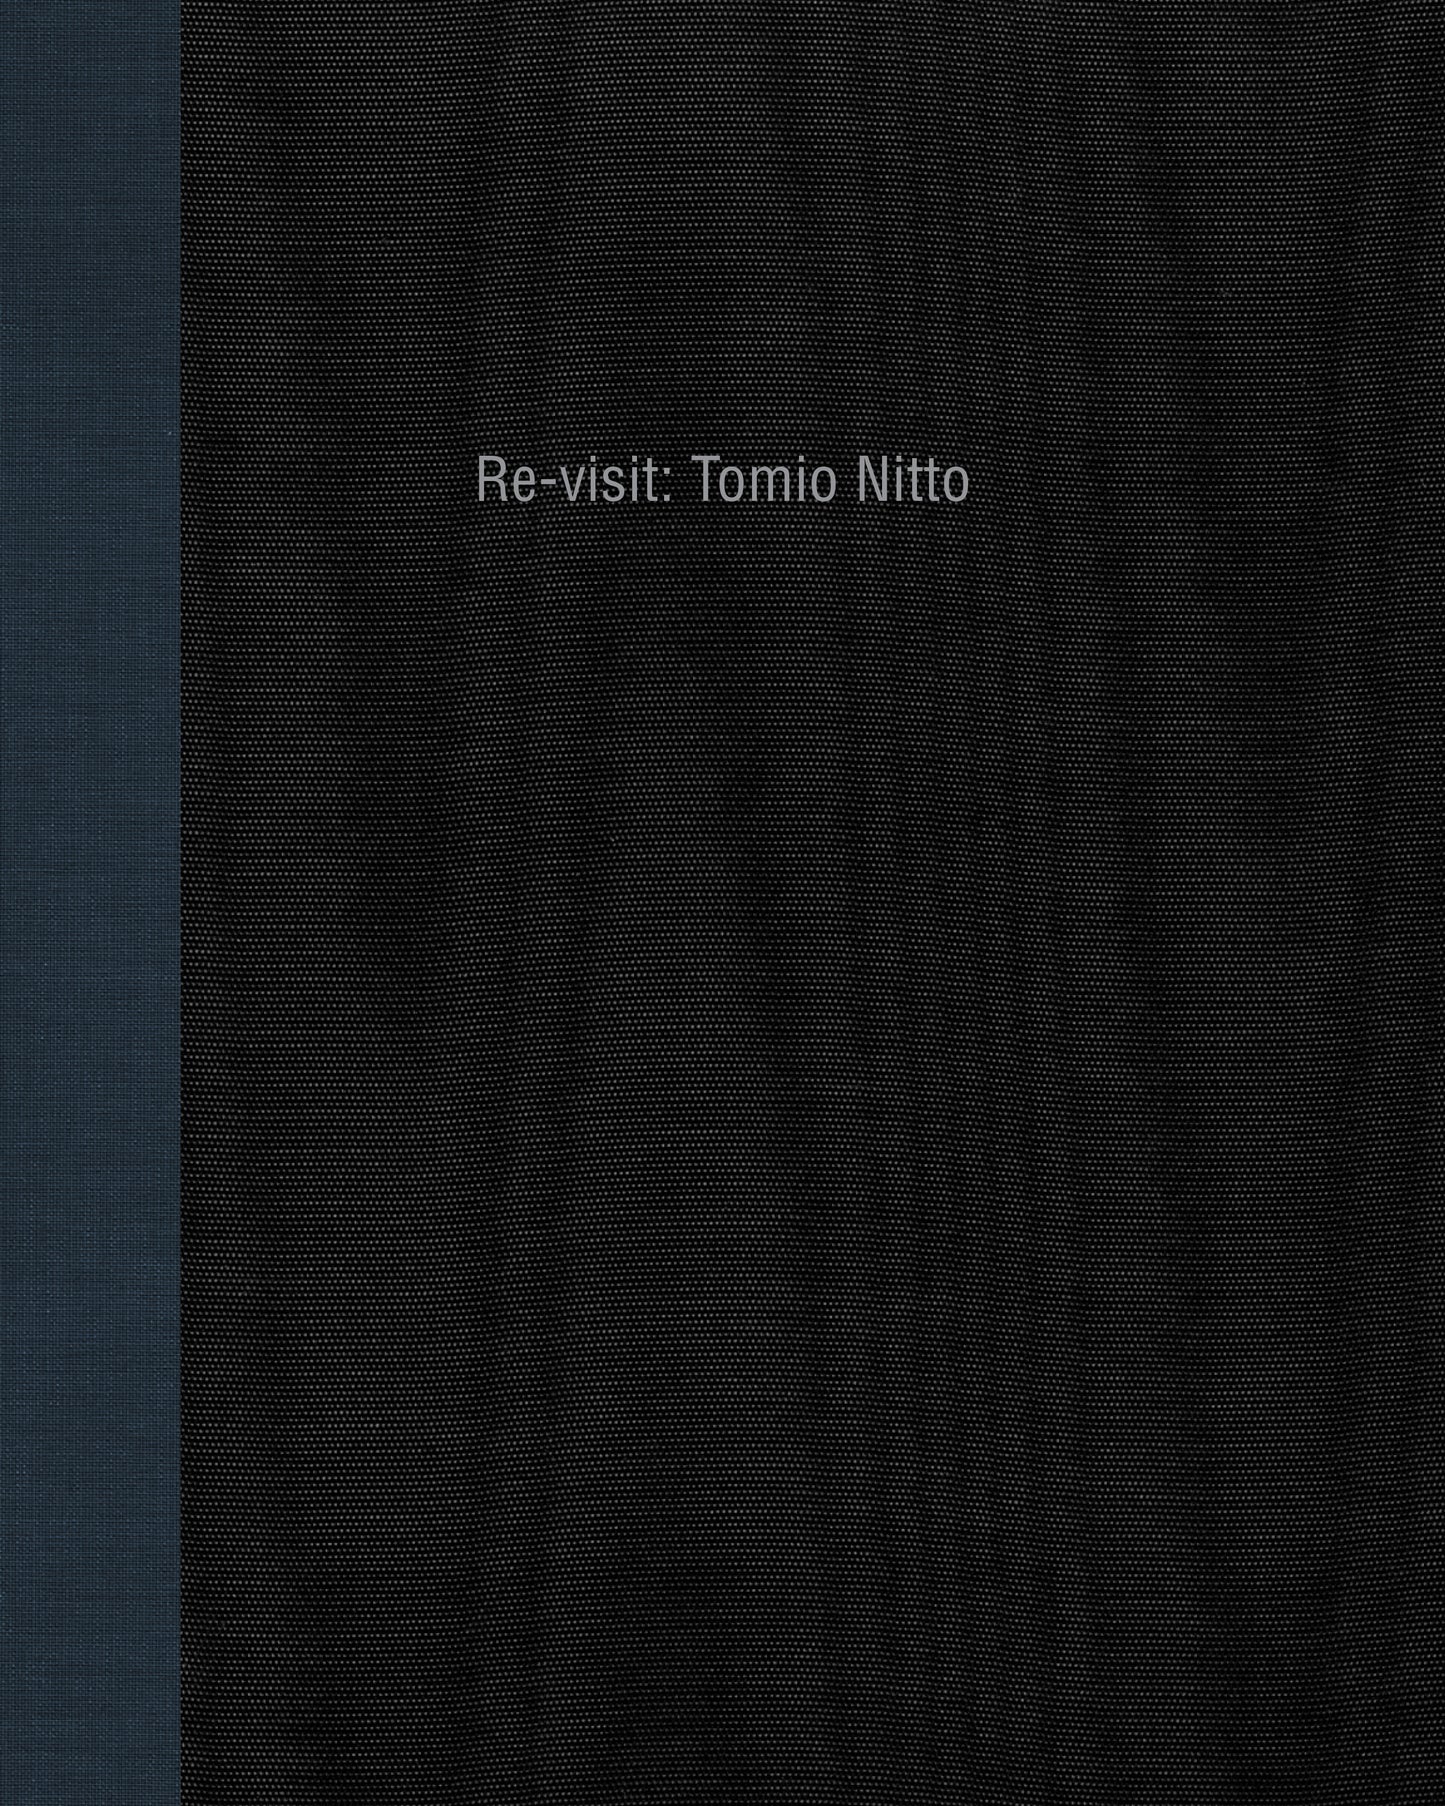 Re-visit: Tomio Nitto